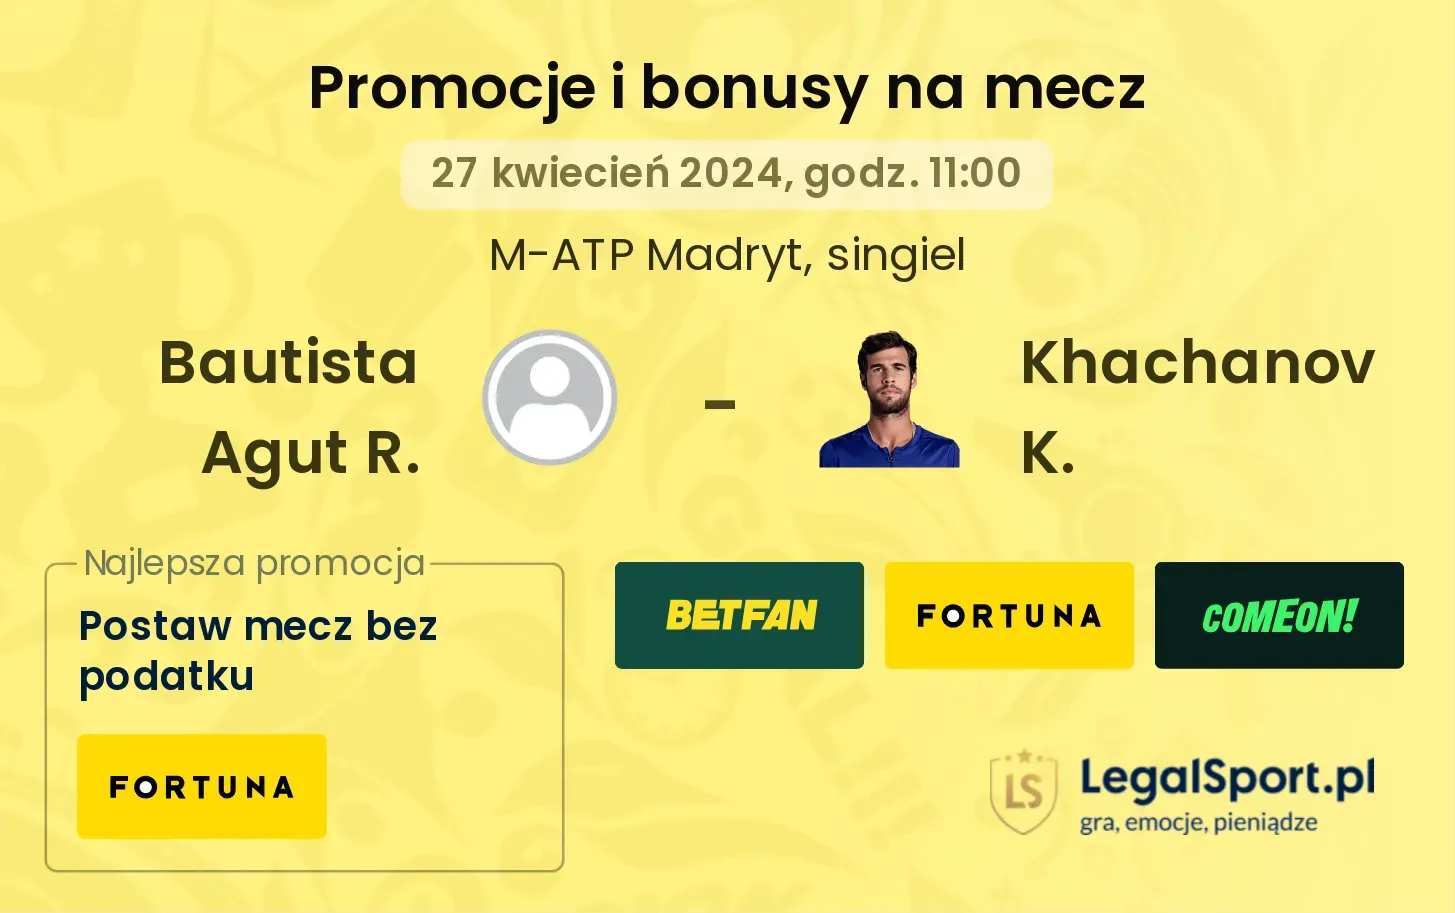 Bautista Agut R. - Khachanov K. promocje bonusy na mecz